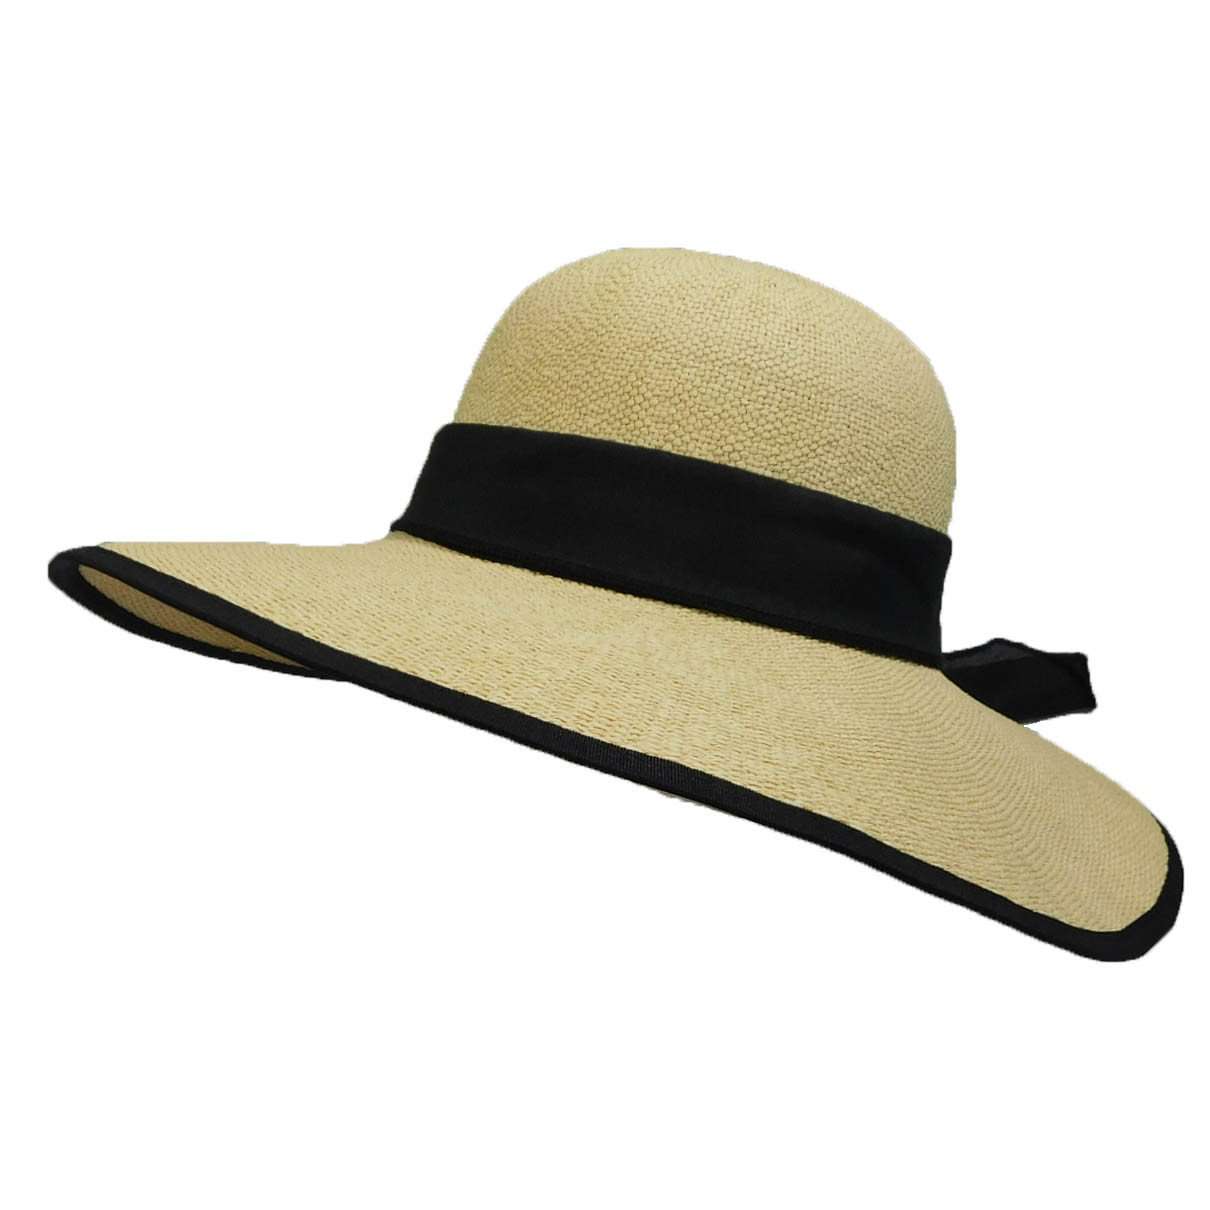 Woven Bangkok Straw Sun Hat with Split Brim - Boardwalk Style, Wide Brim Sun Hat - SetarTrading Hats 